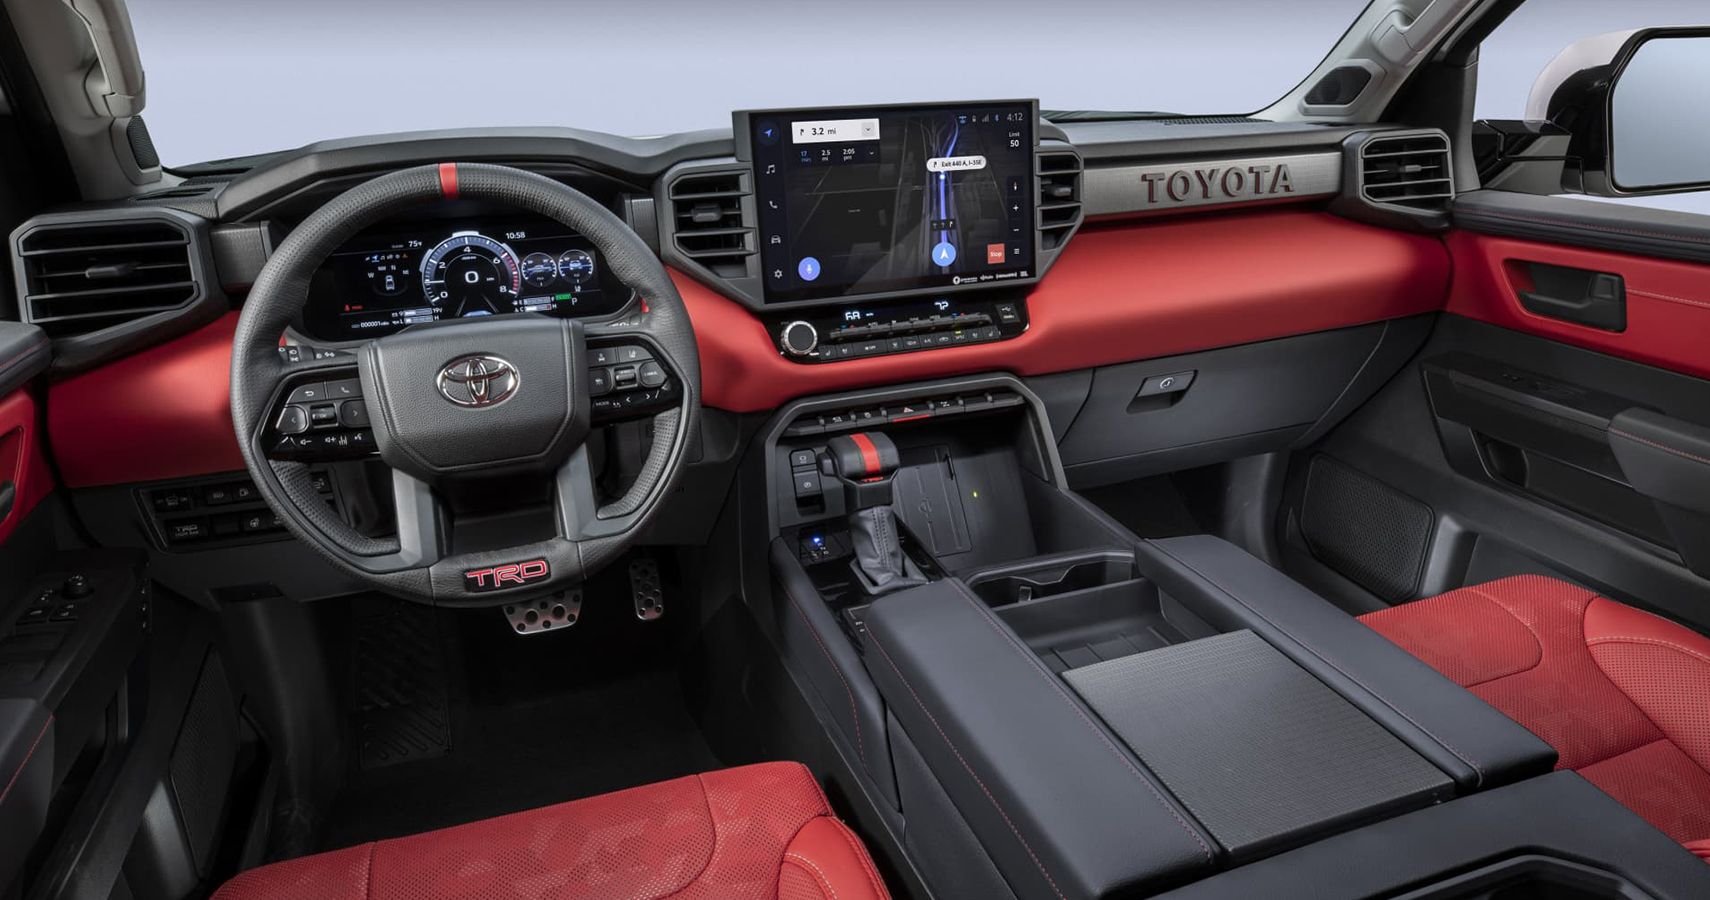 2022 Toyota Tundra interior press image